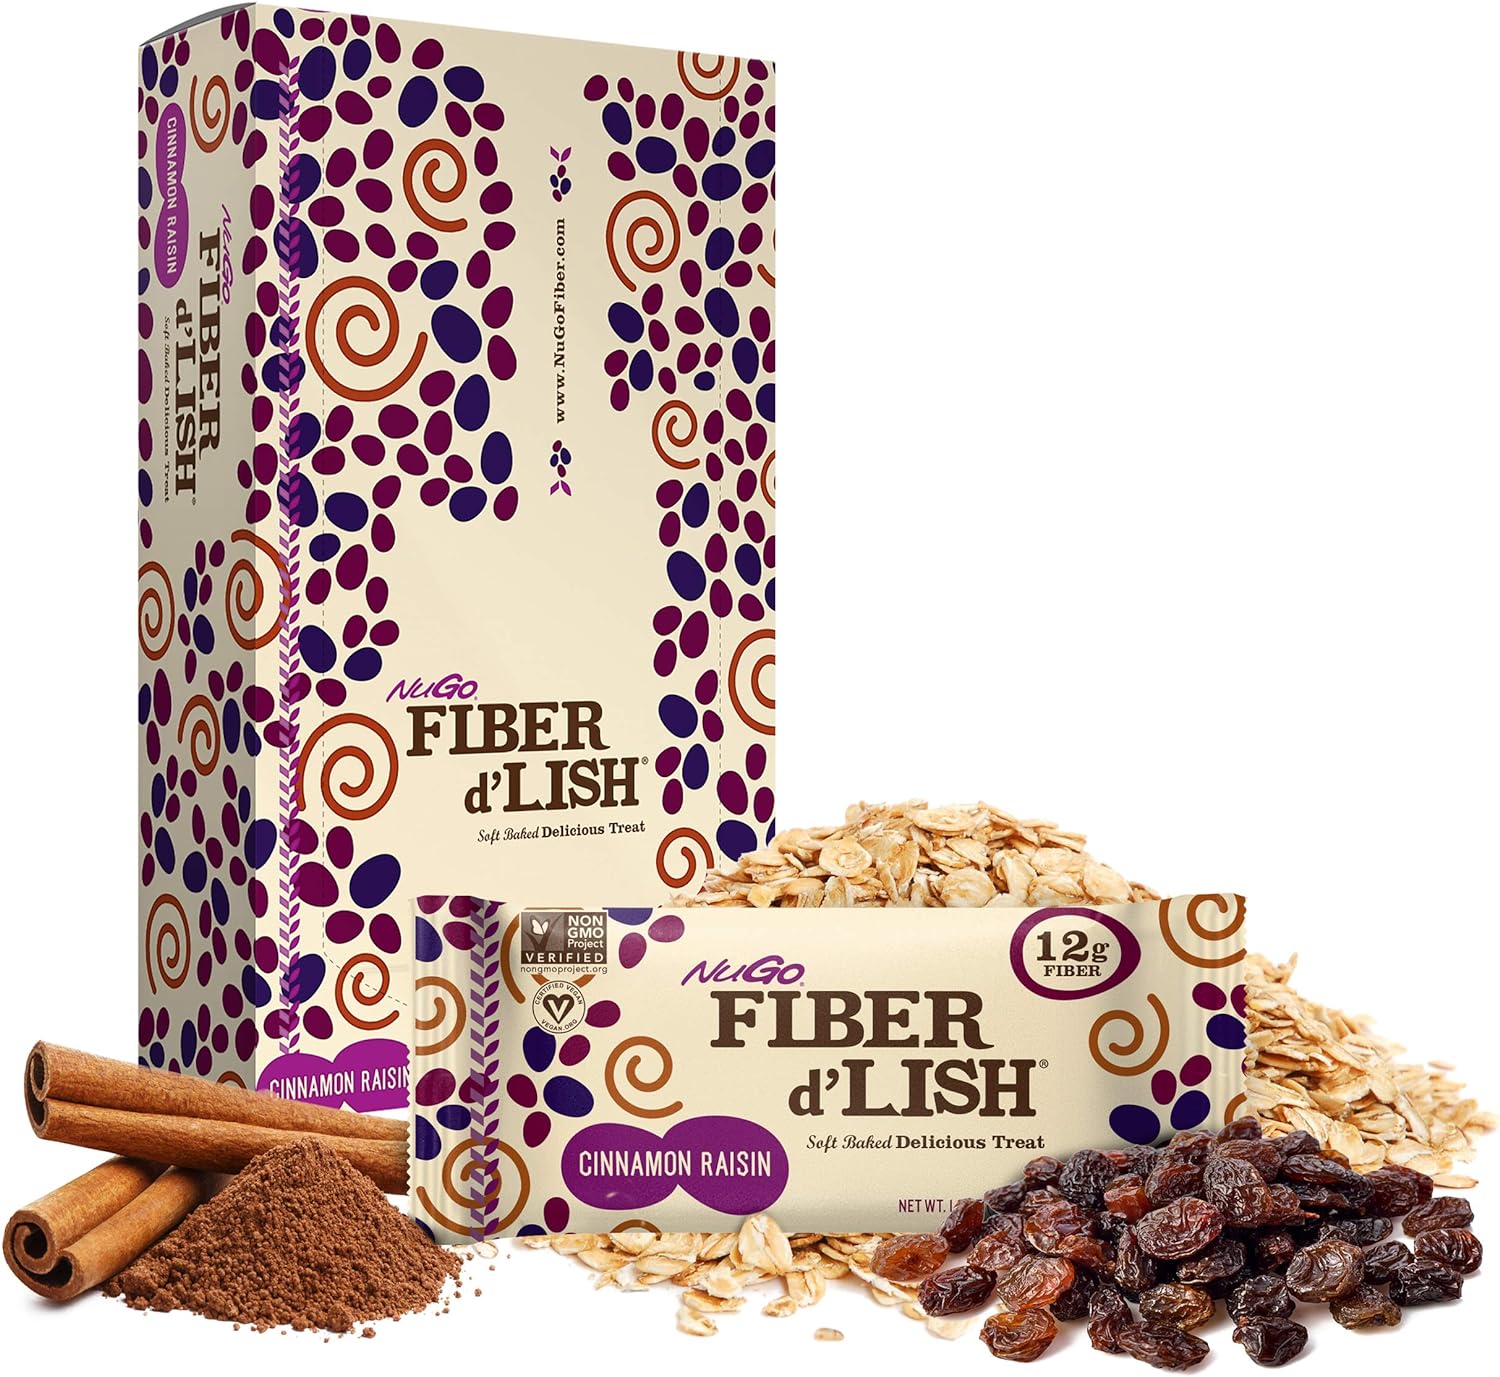 NuGO Fiber d'Lish Cinnamon Raisin, 12g High Fiber, Vegan, 150 Calories1.6 Pounds